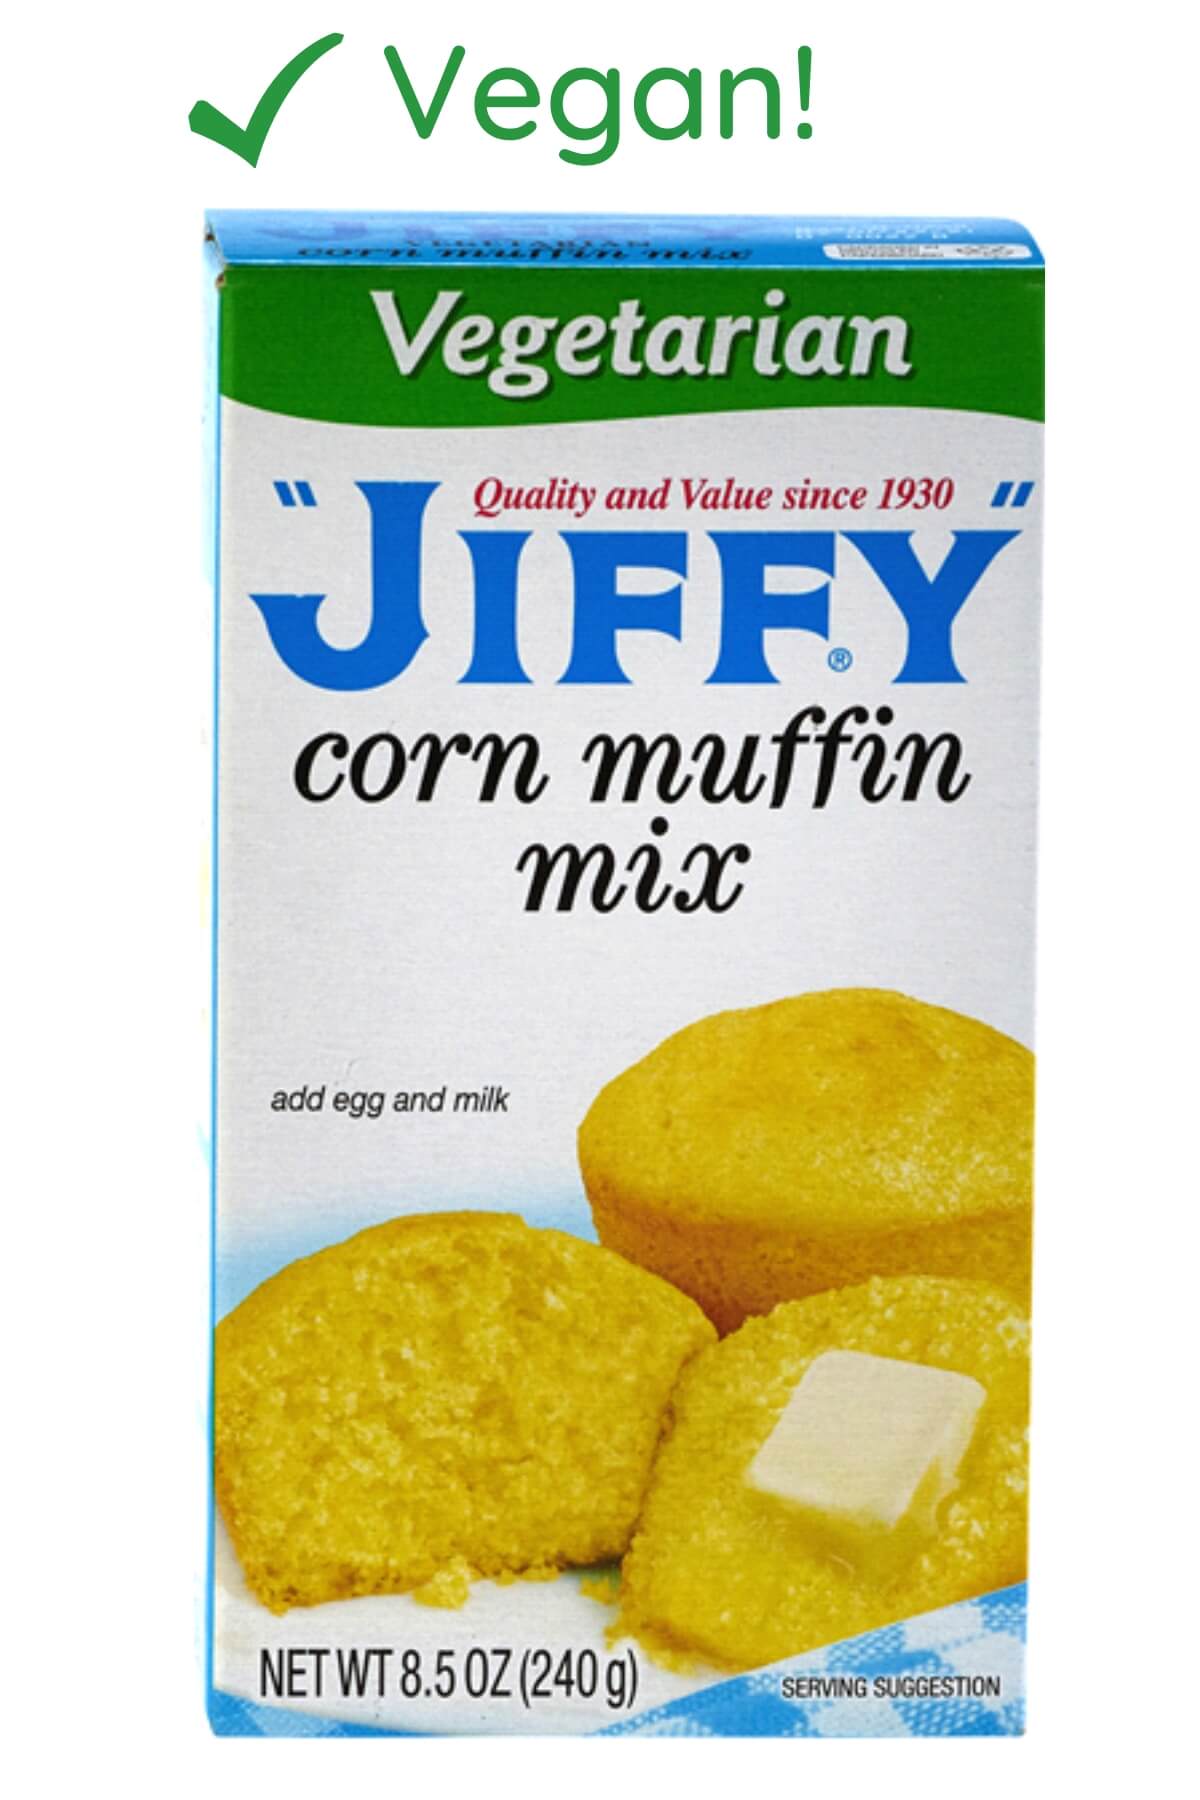 A box of jiffy vegetarian cornbread mix that is vegan.